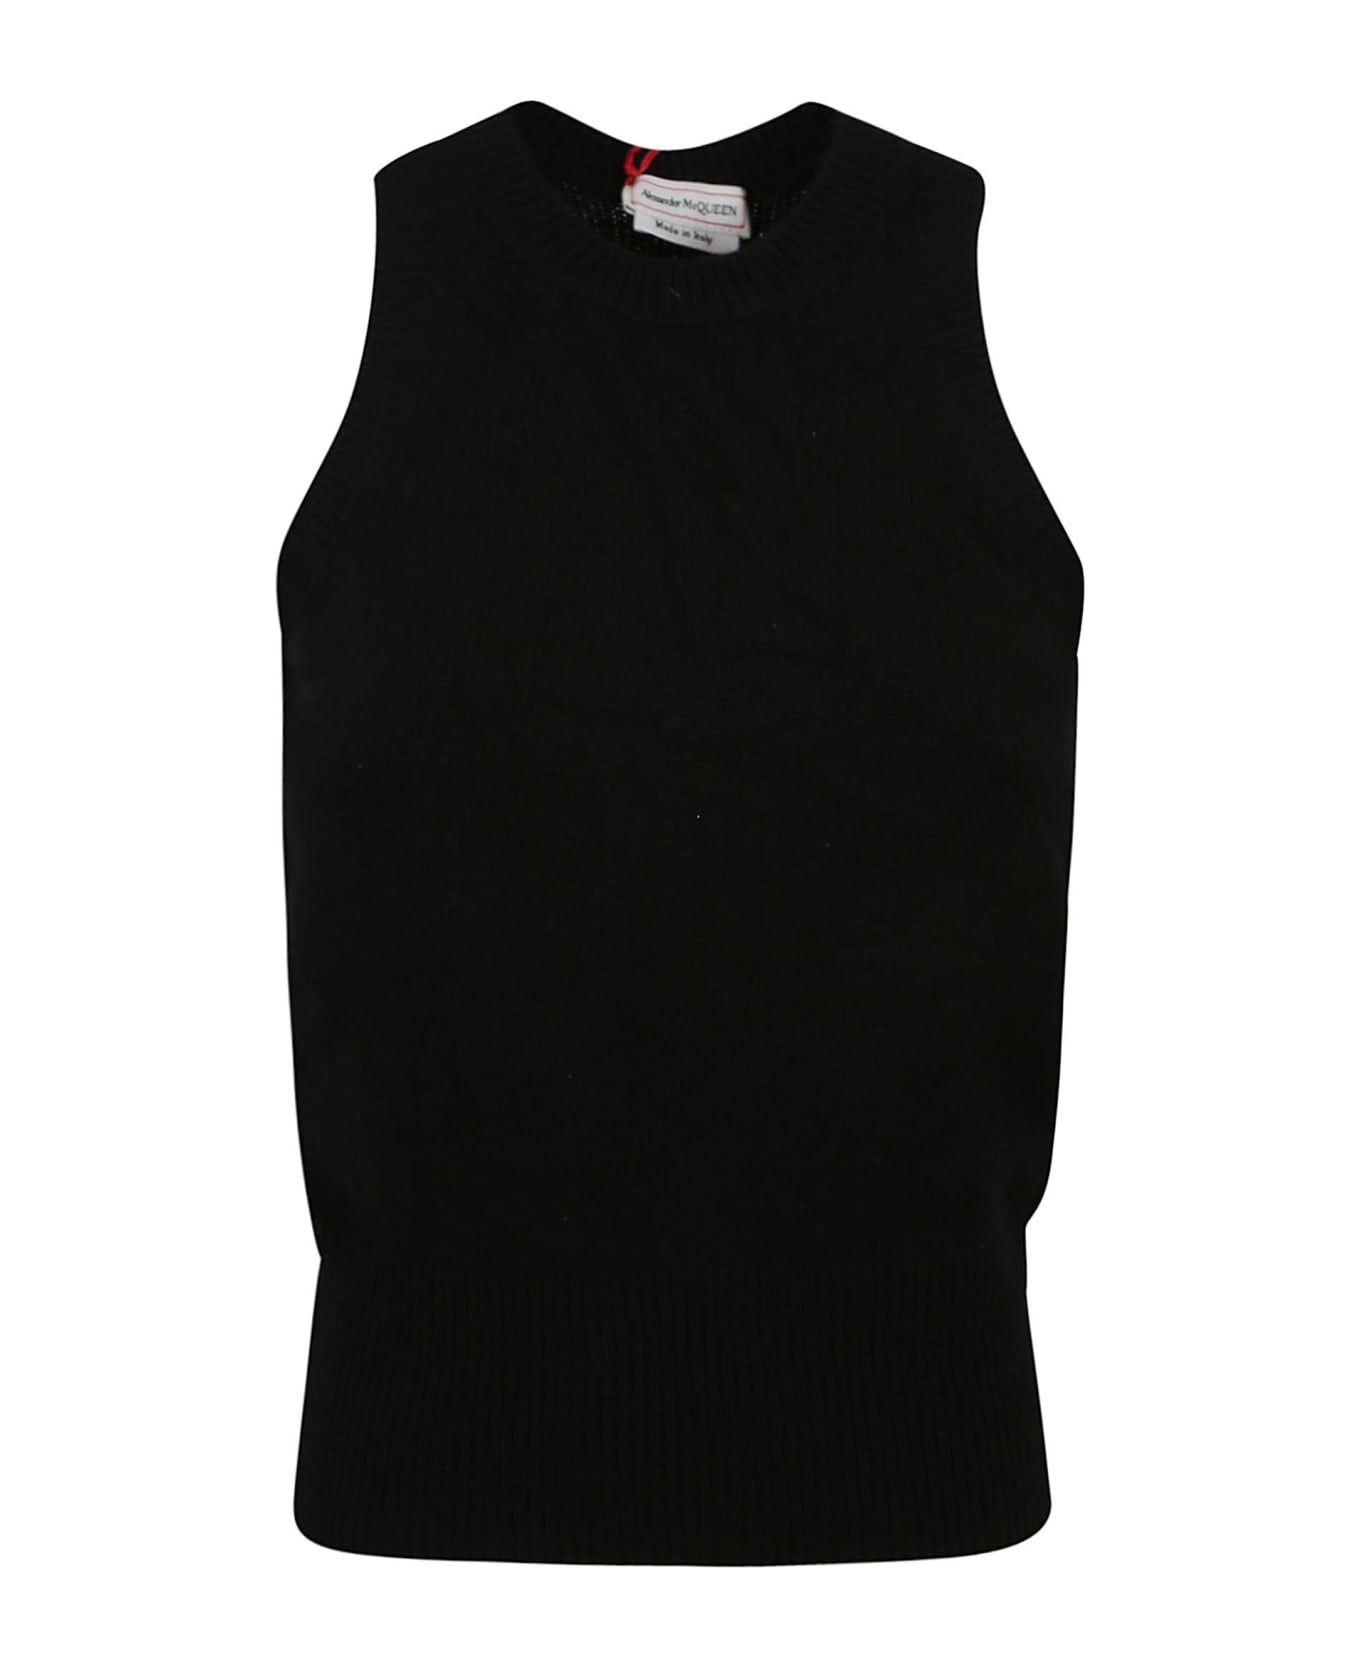 Alexander McQueen Black Knitted Sleeveless Top - Black